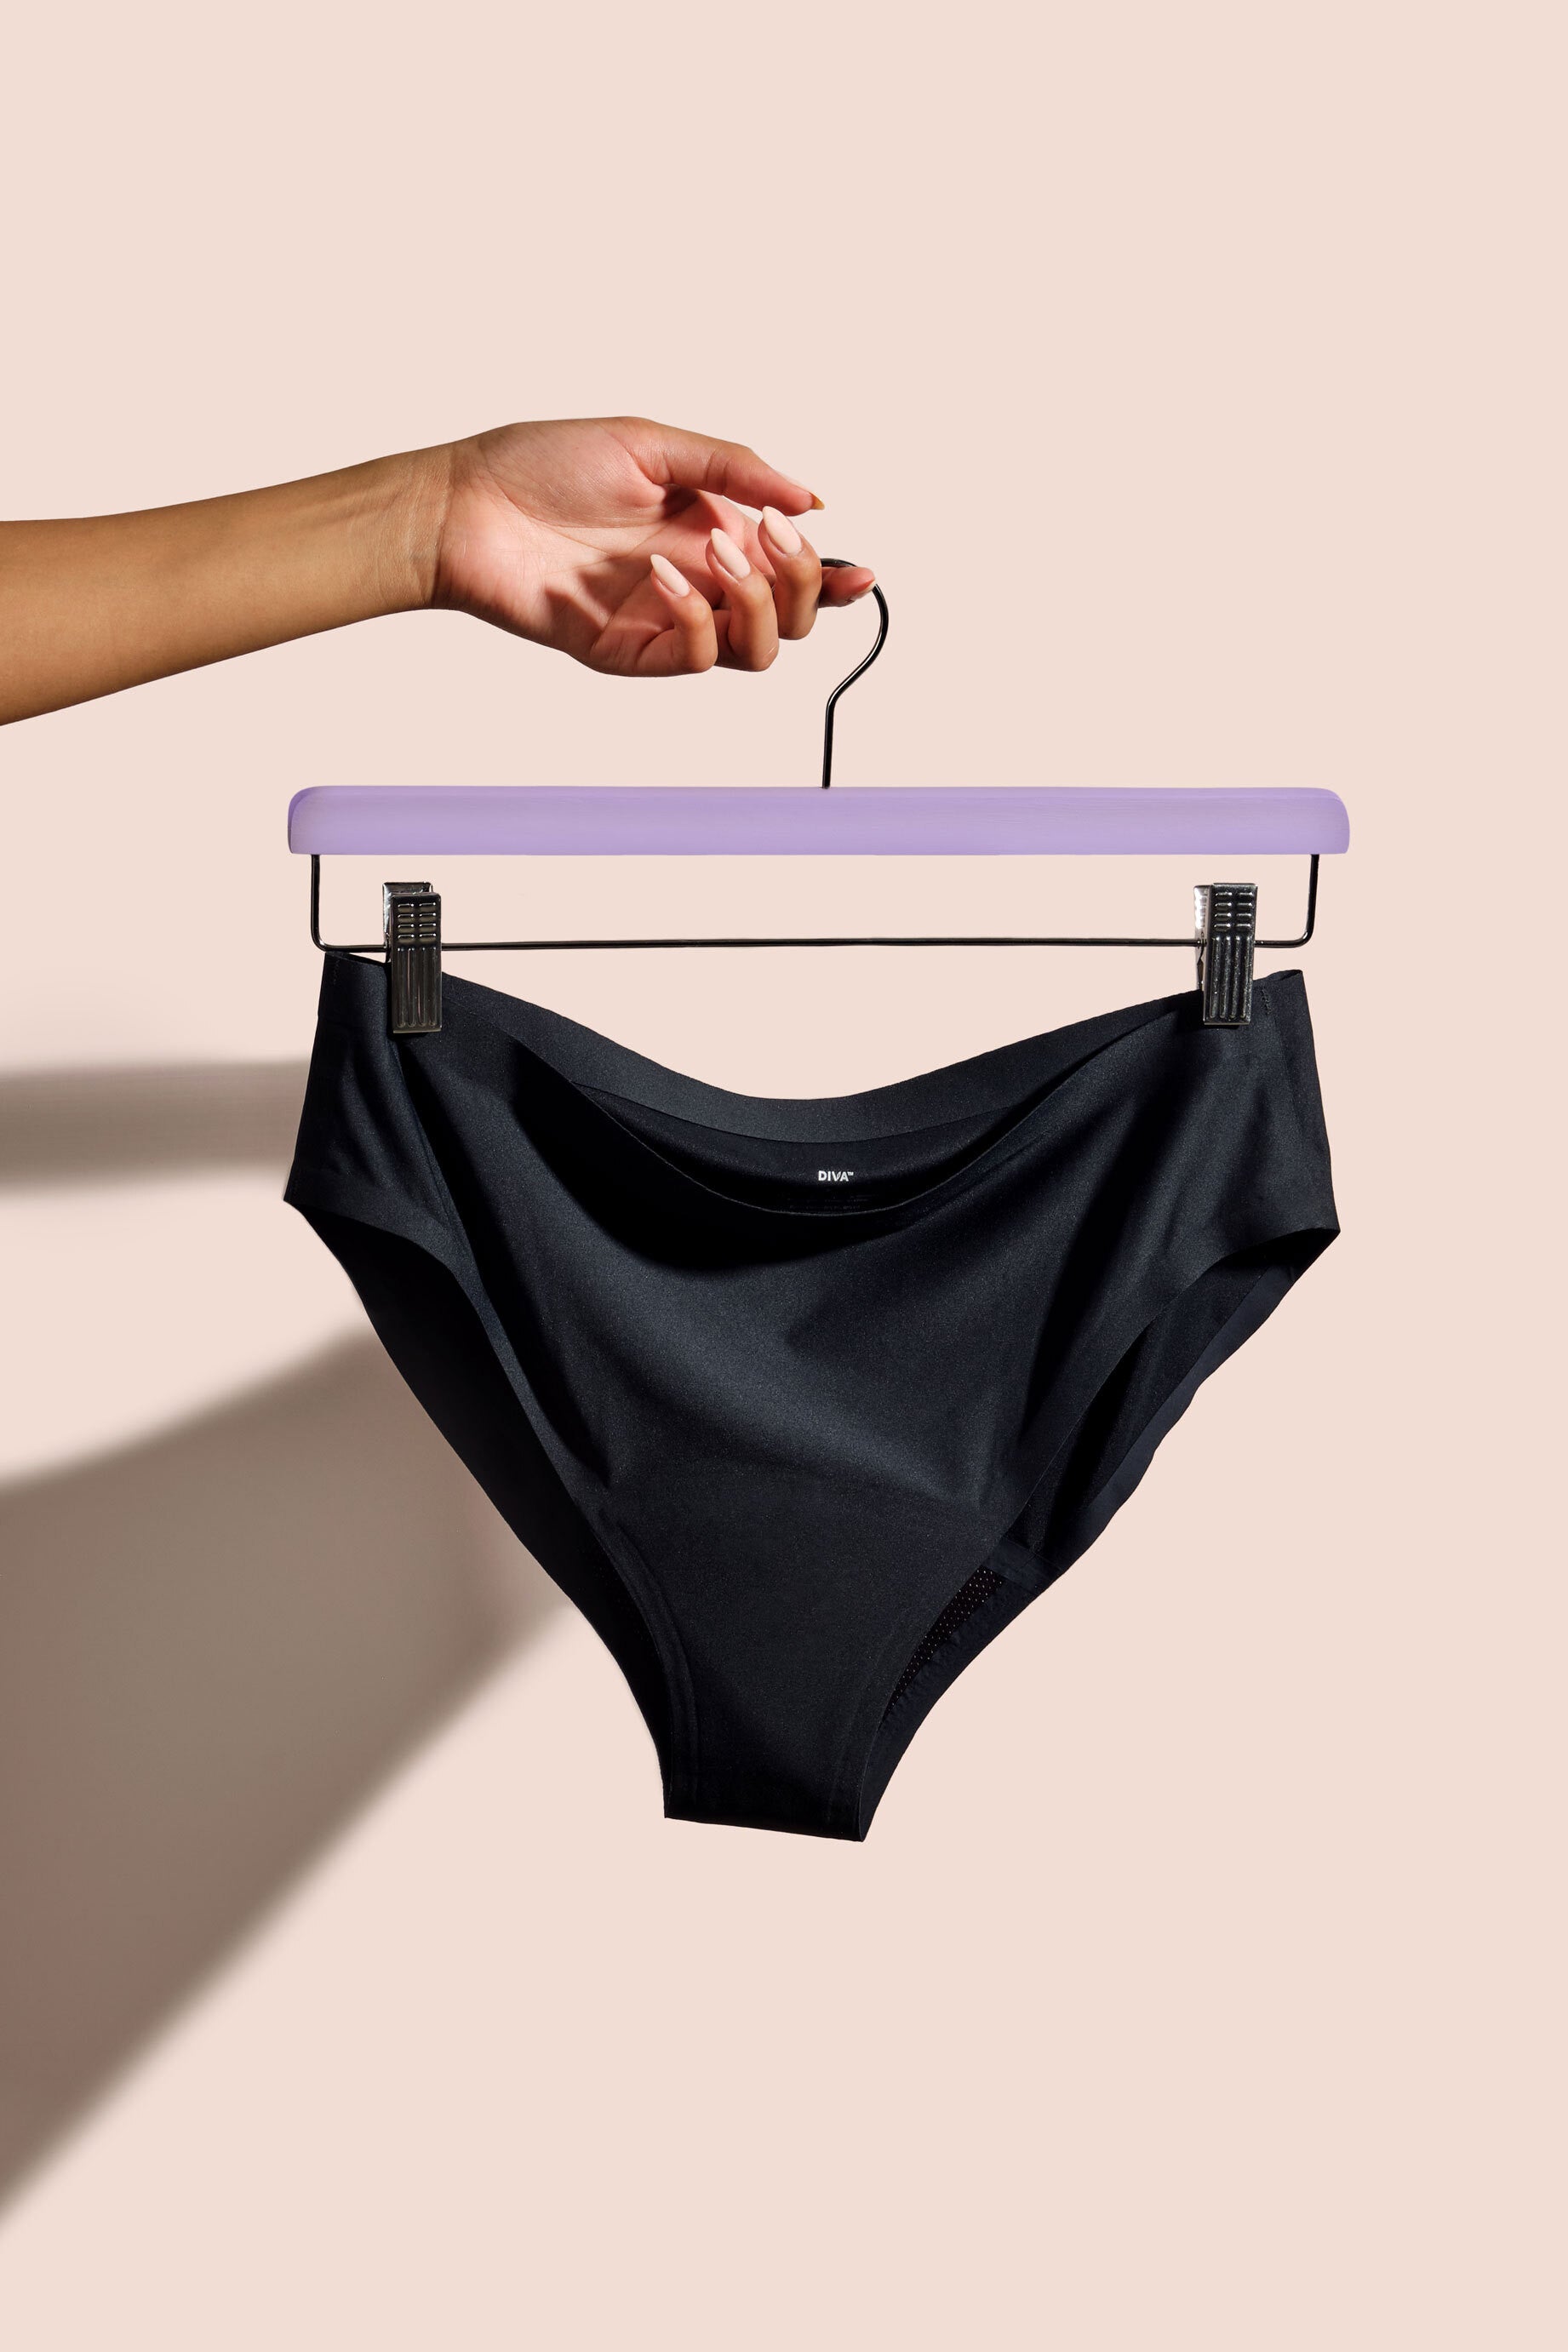 leakproof period underwear